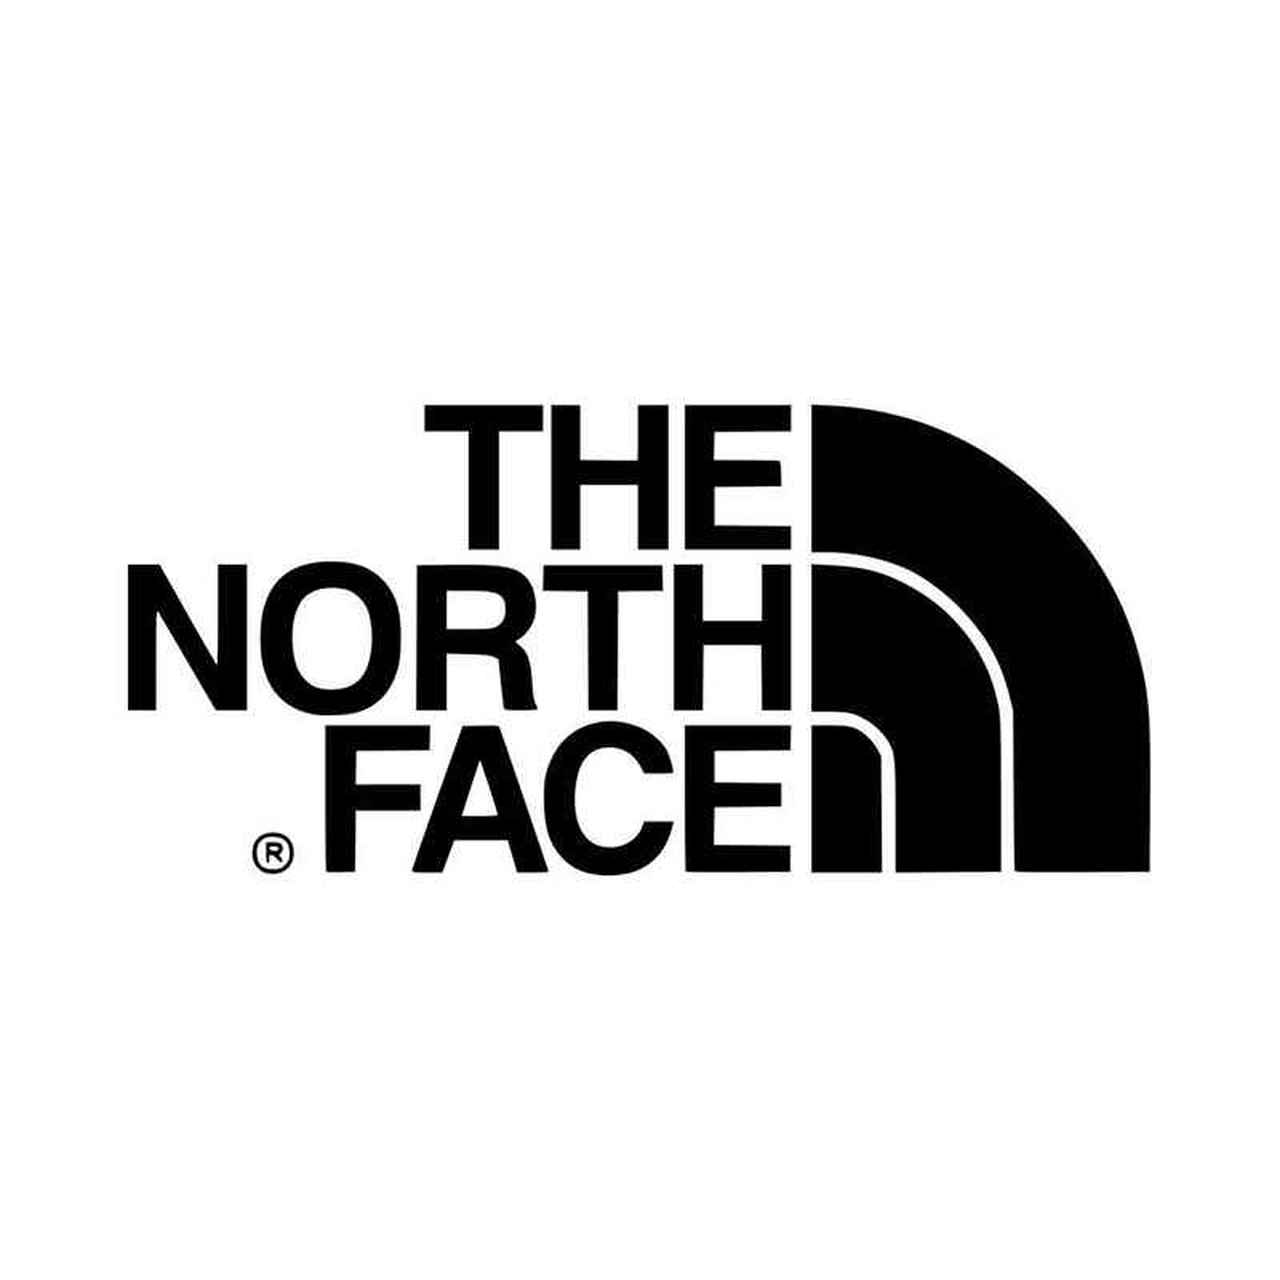 the north face motto